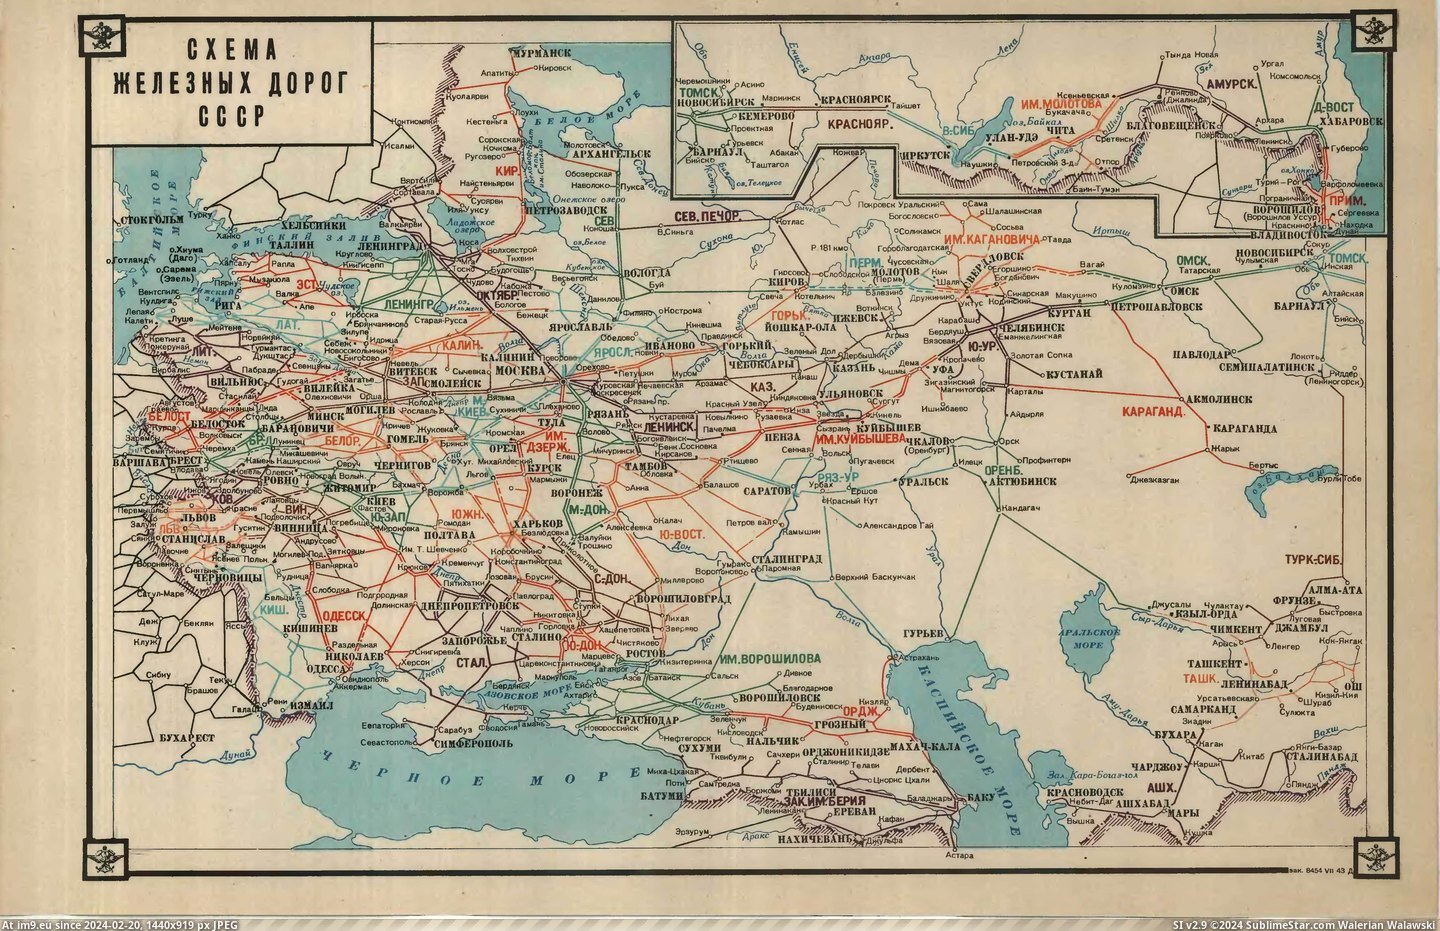 #Album #Military #Atlas #Railroad #Network [Mapporn] military atlas of the USSR railroad and waterway network in 1943 (album in comments) [5269x3375] Pic. (Bild von album My r/MAPS favs))